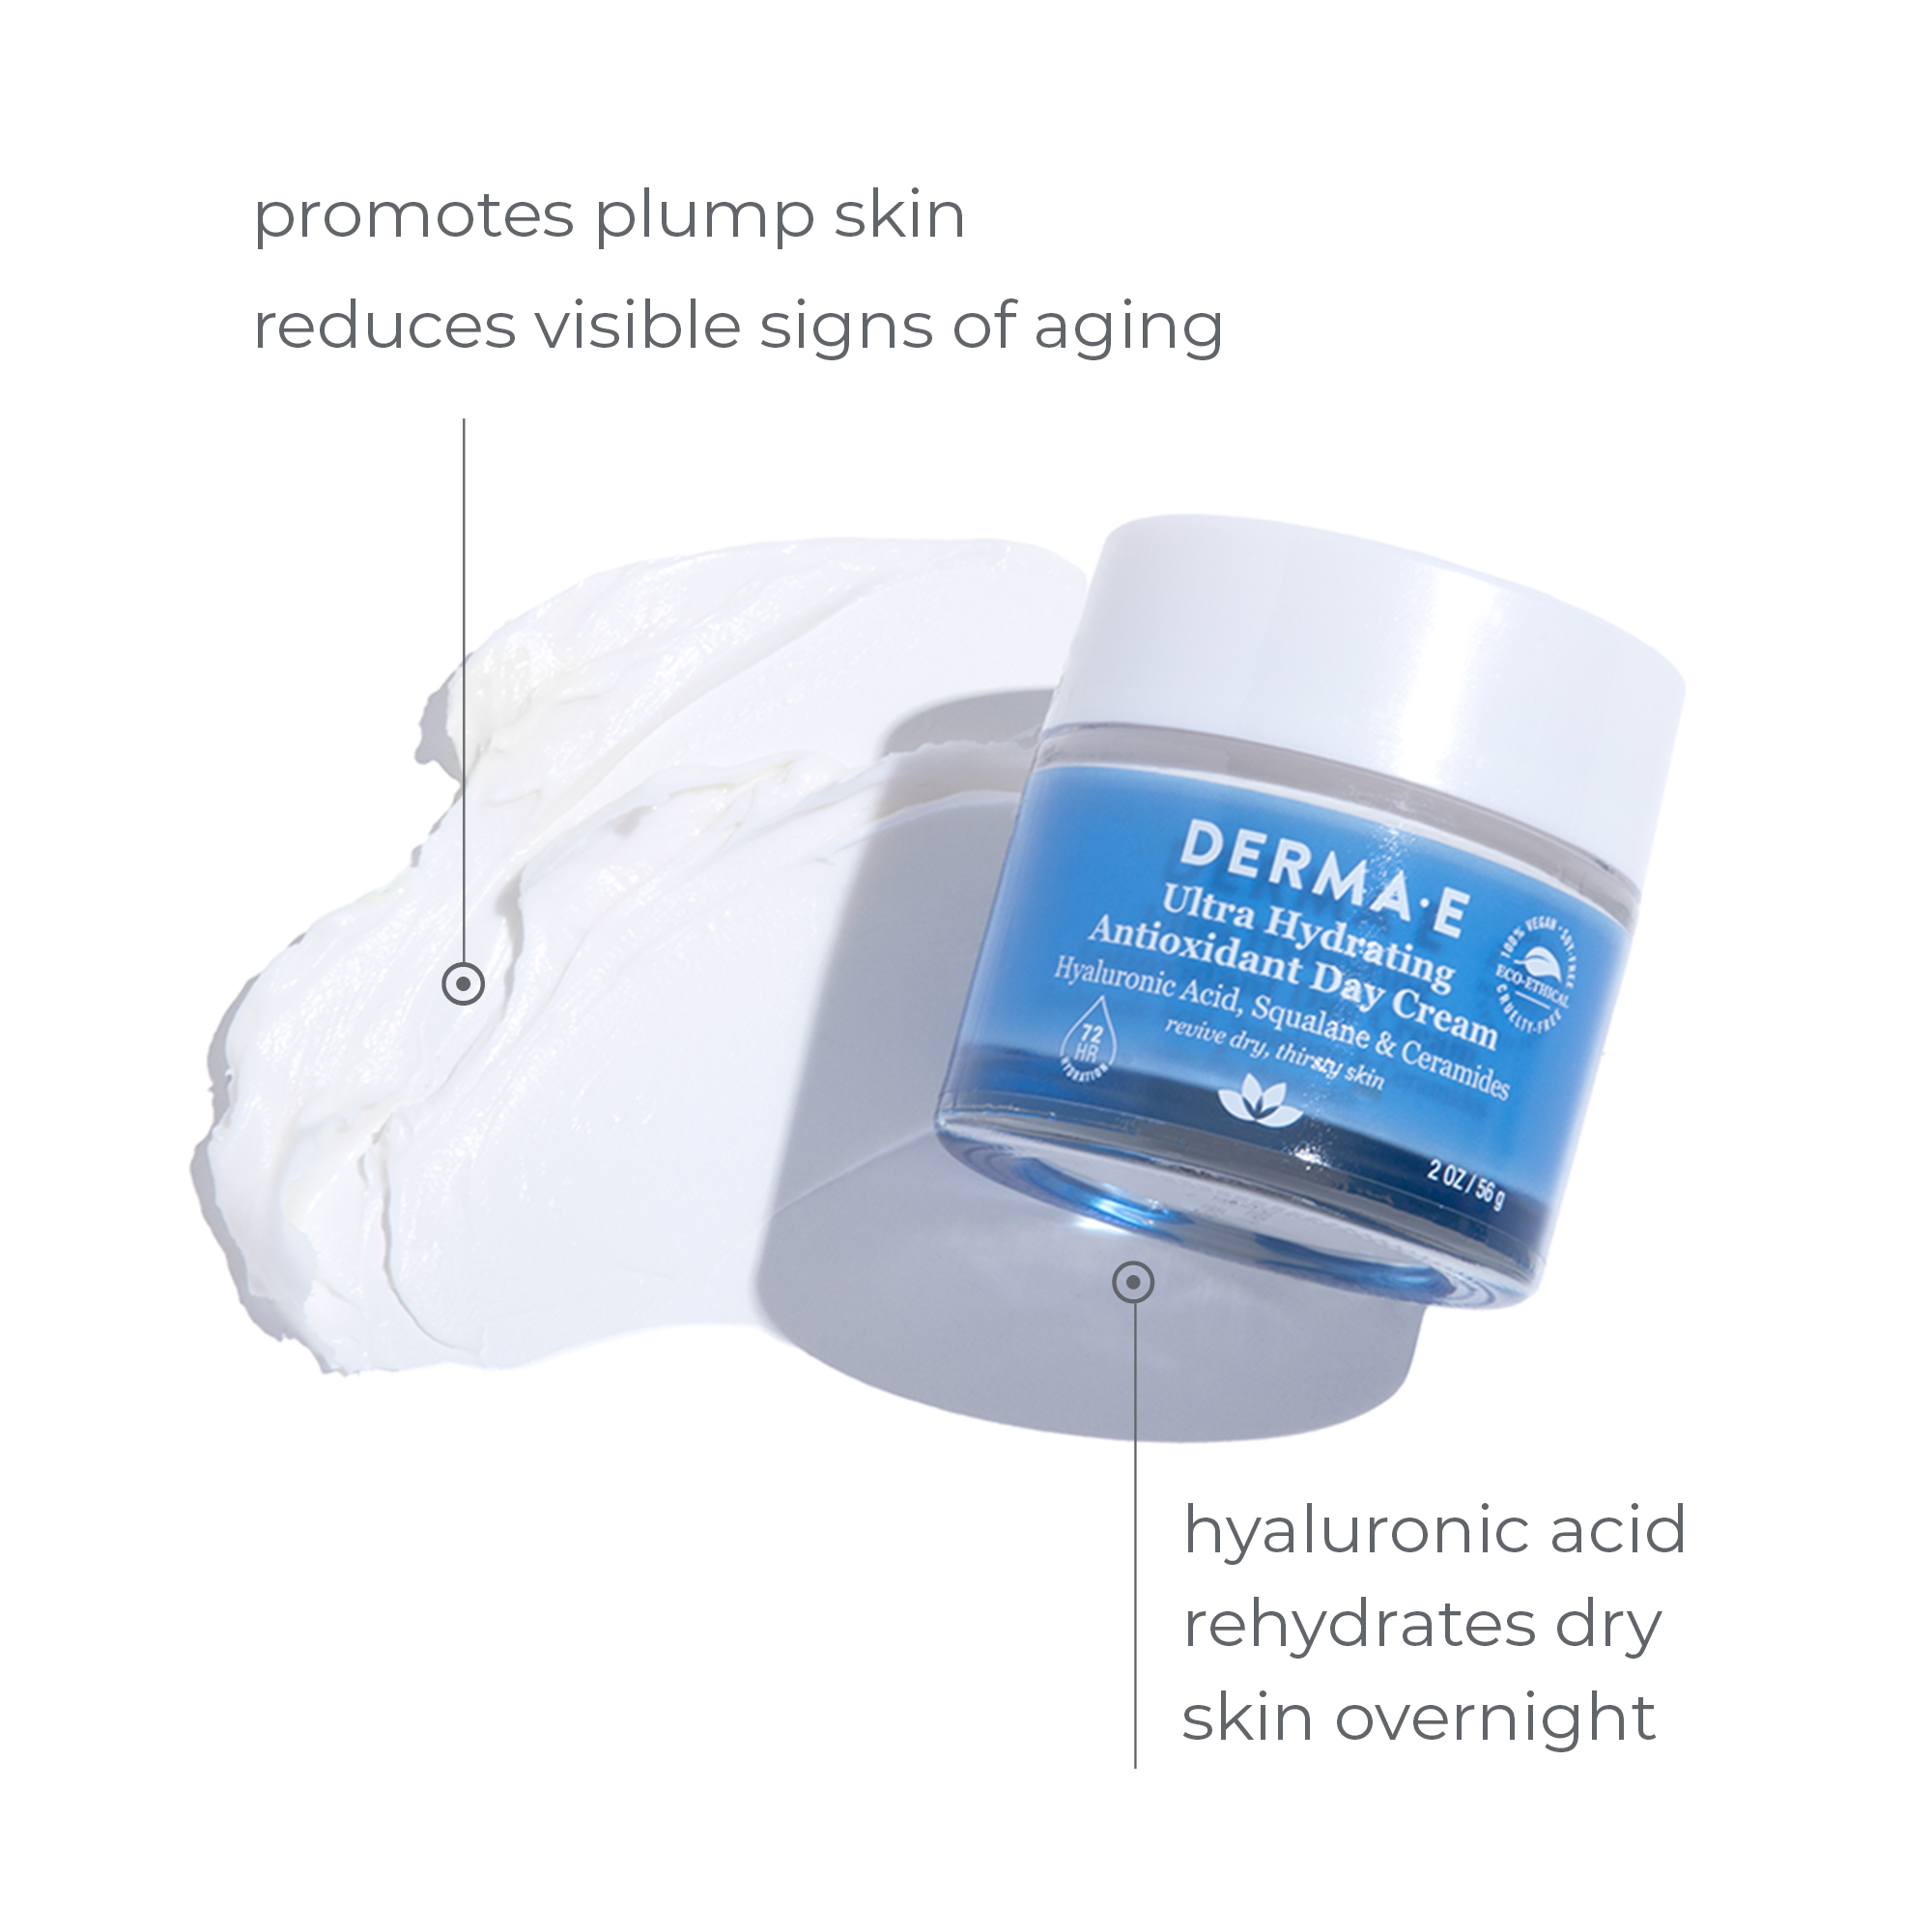 DERMA E Ultra Hydrating Antioxidant Moisturizing Day Cream, Vegan Skin Care, 2 oz - image 5 of 10